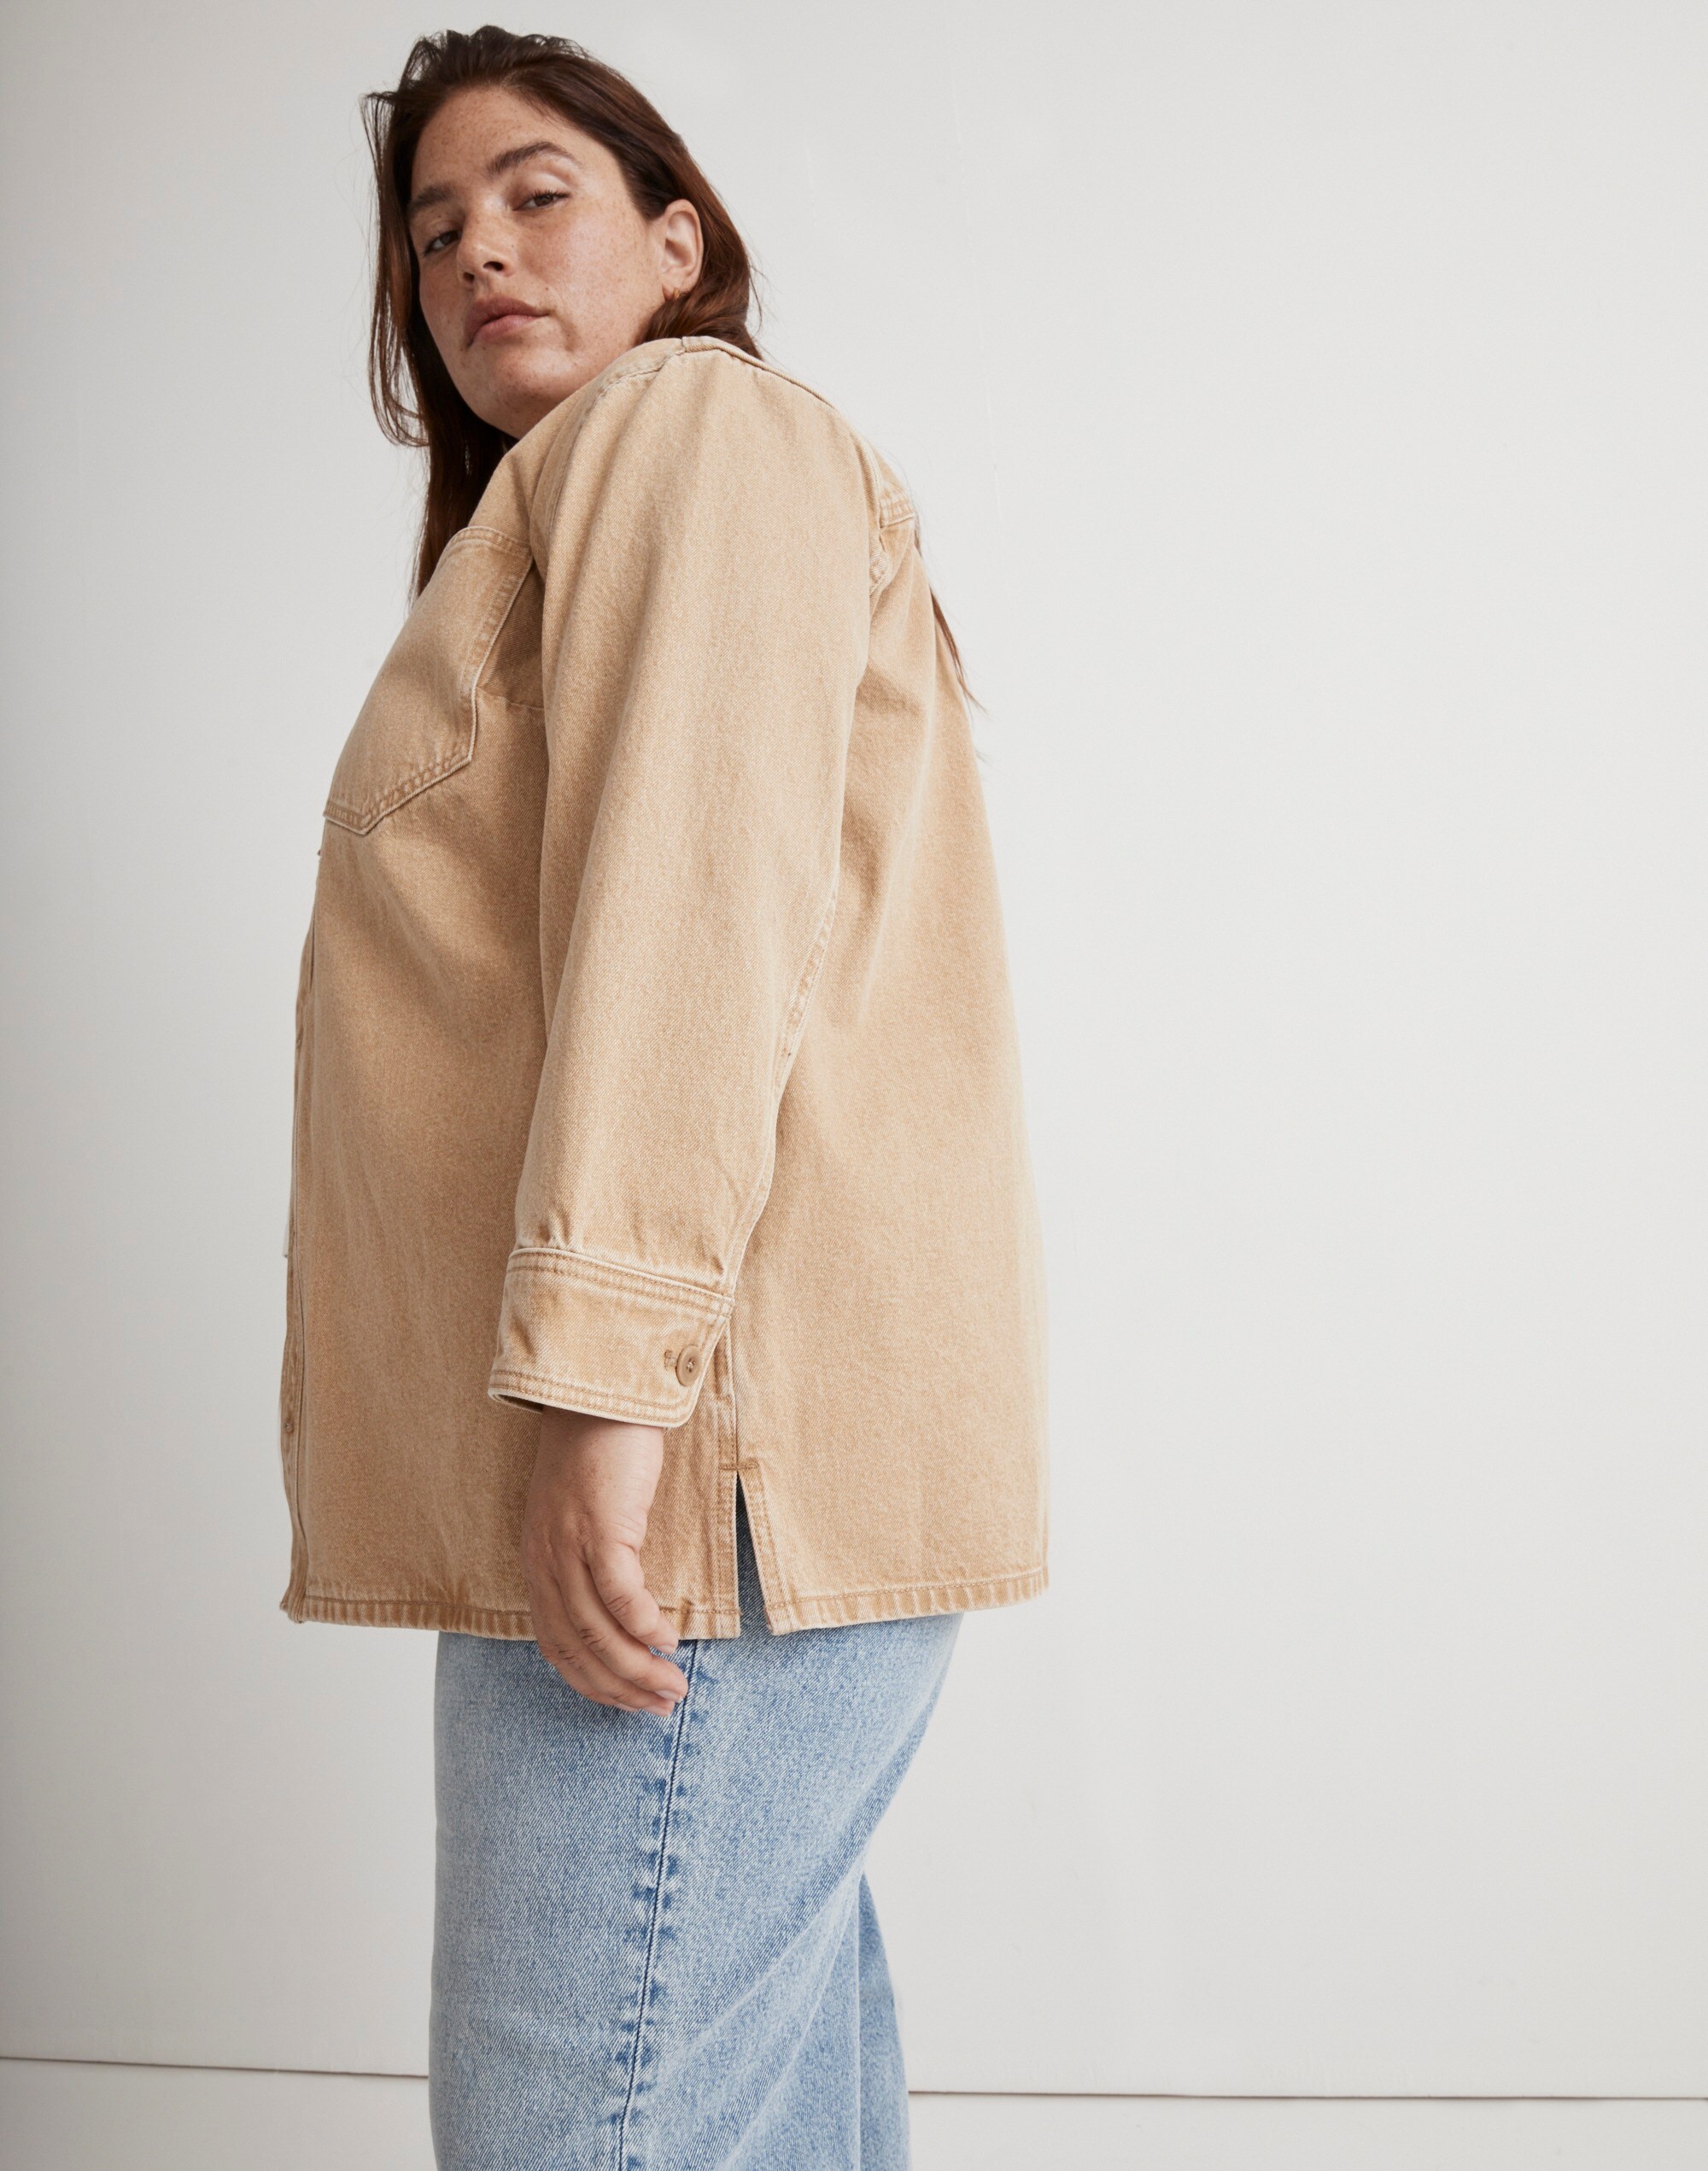 Madewell Women's Denim Shirt-Jacket: Botanical Yarn-Dye Edition in Light Chestnut Wash - Size XL